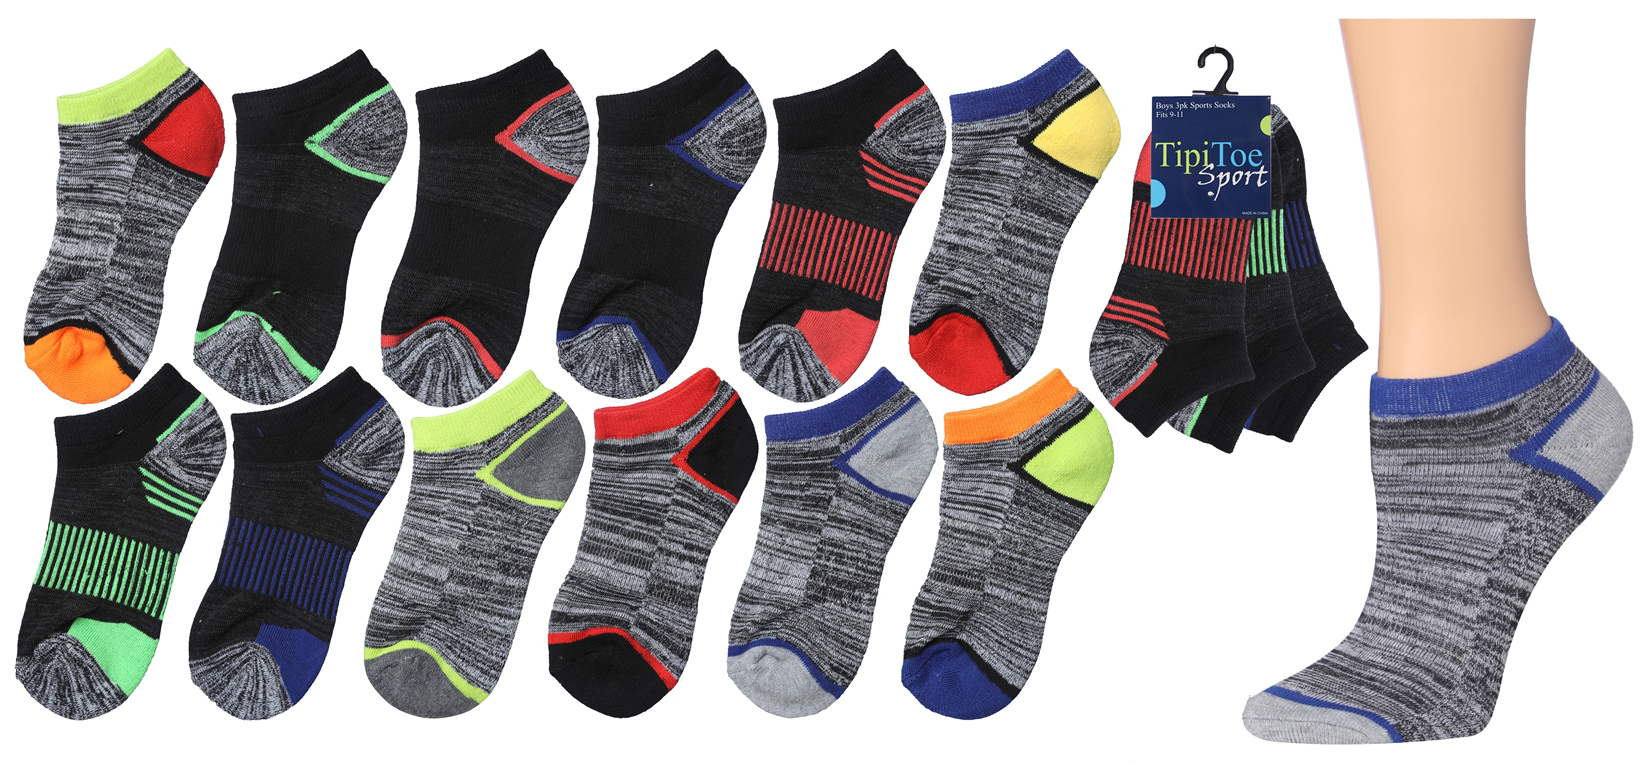 Boy's Cushioned Low Cut Socks w/ Arch Support - URBAN Sport Prints - Size 6-8 - 3-Pair Packs